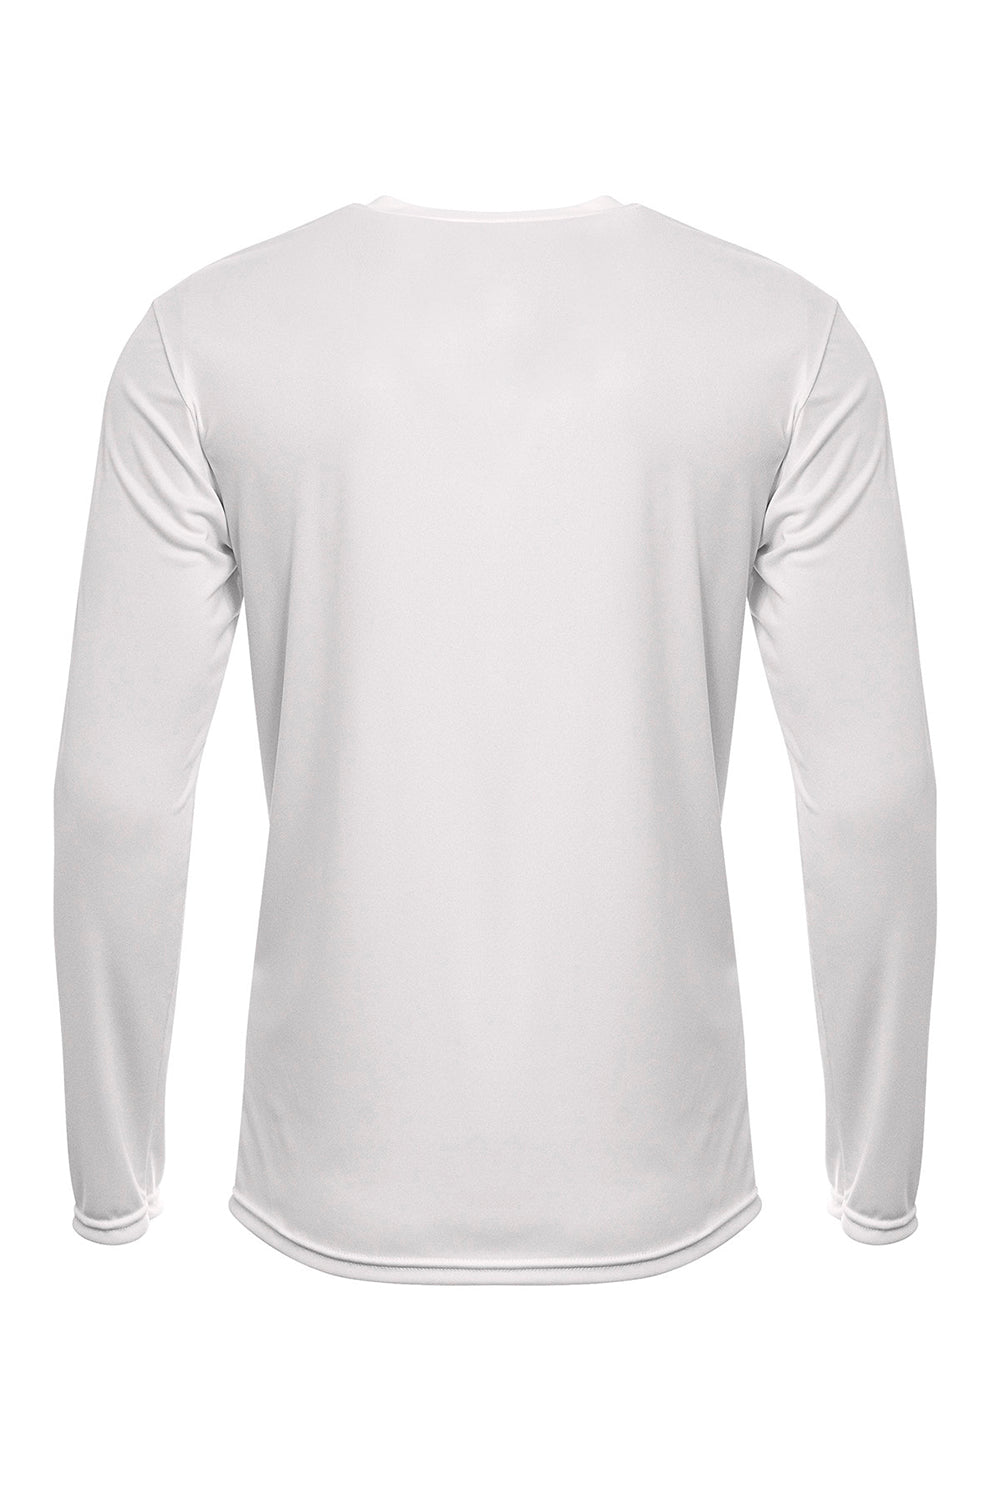 A4 N3425 Mens Sprint Moisture Wicking Long Sleeve Crewneck T-Shirt White Flat Back